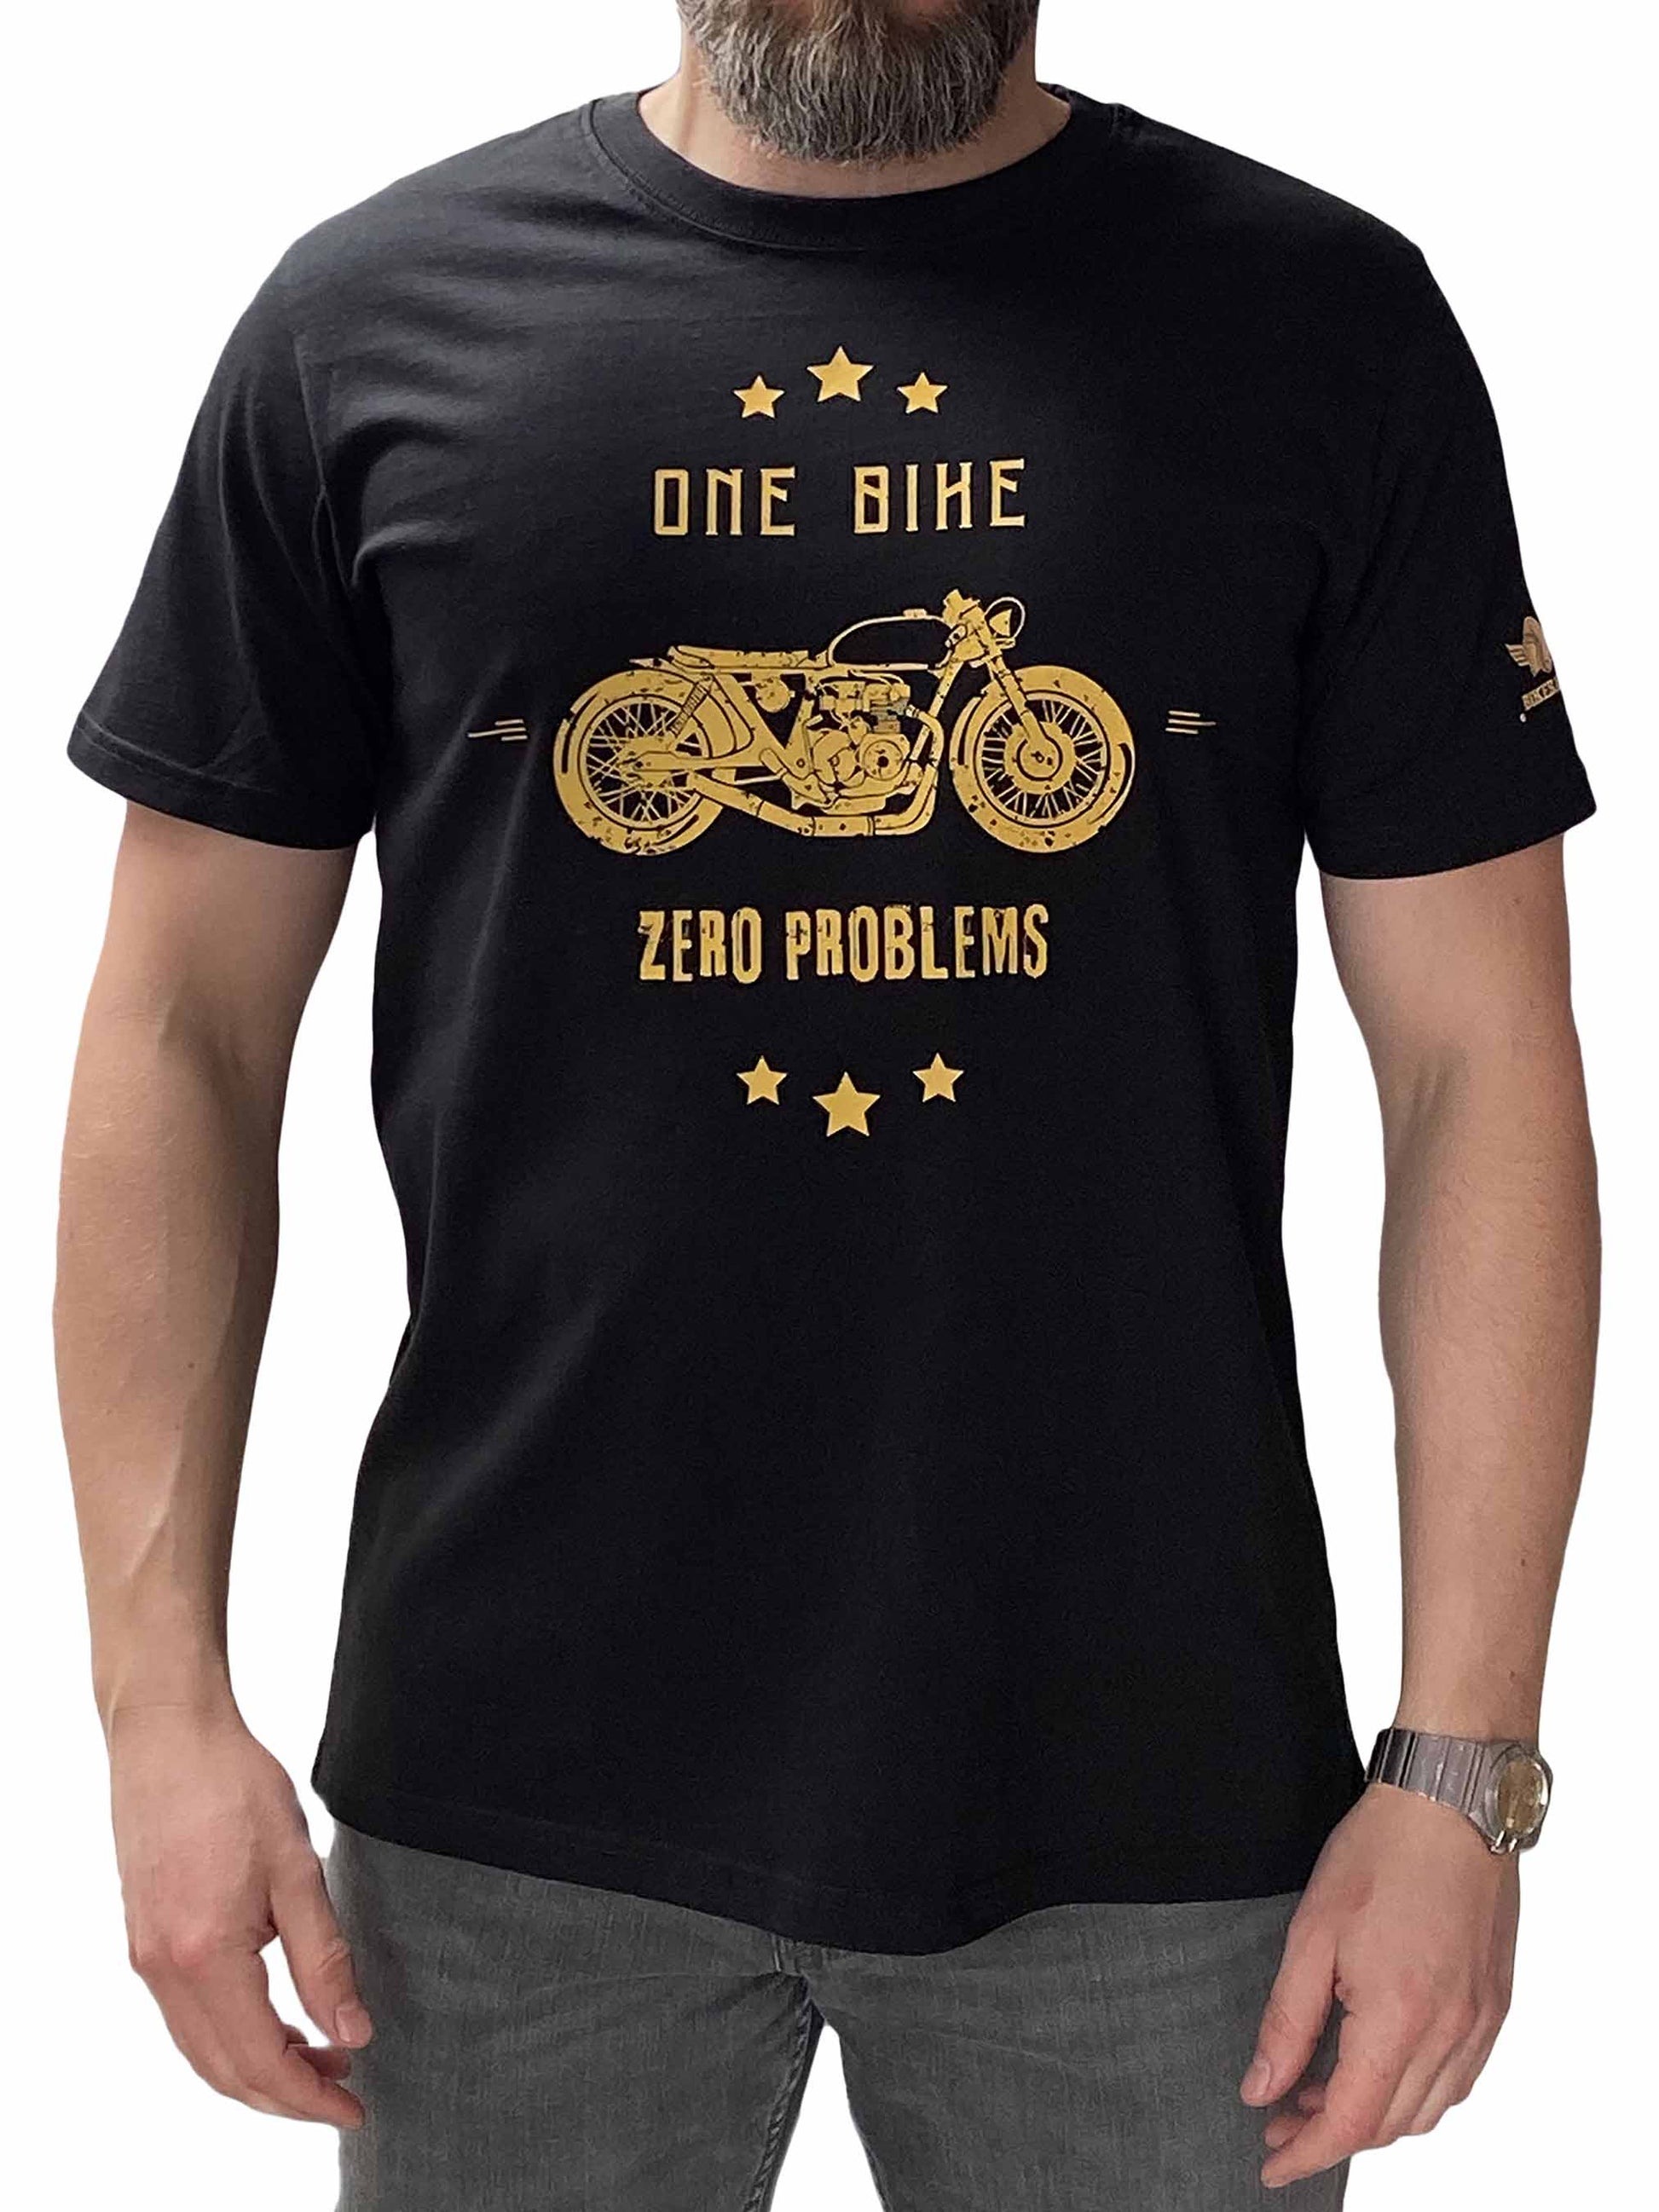 Motorcycle shirt Bikesaint One bike Zero problems black short sleeve front zoom